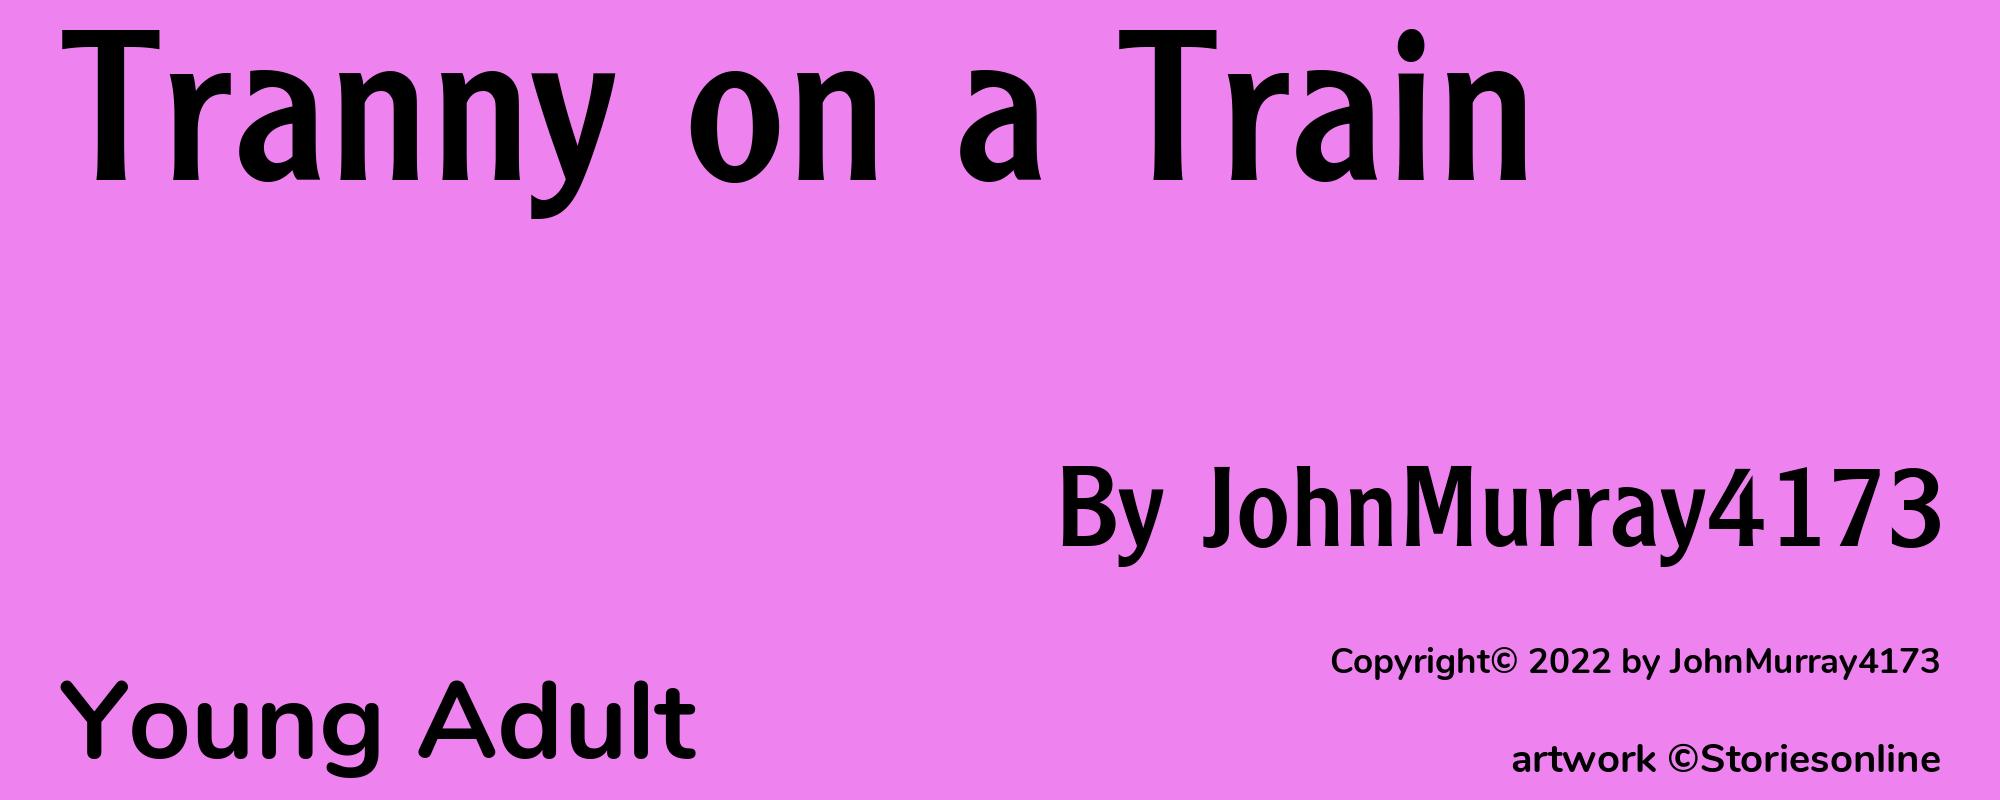 Tranny on a Train - Cover